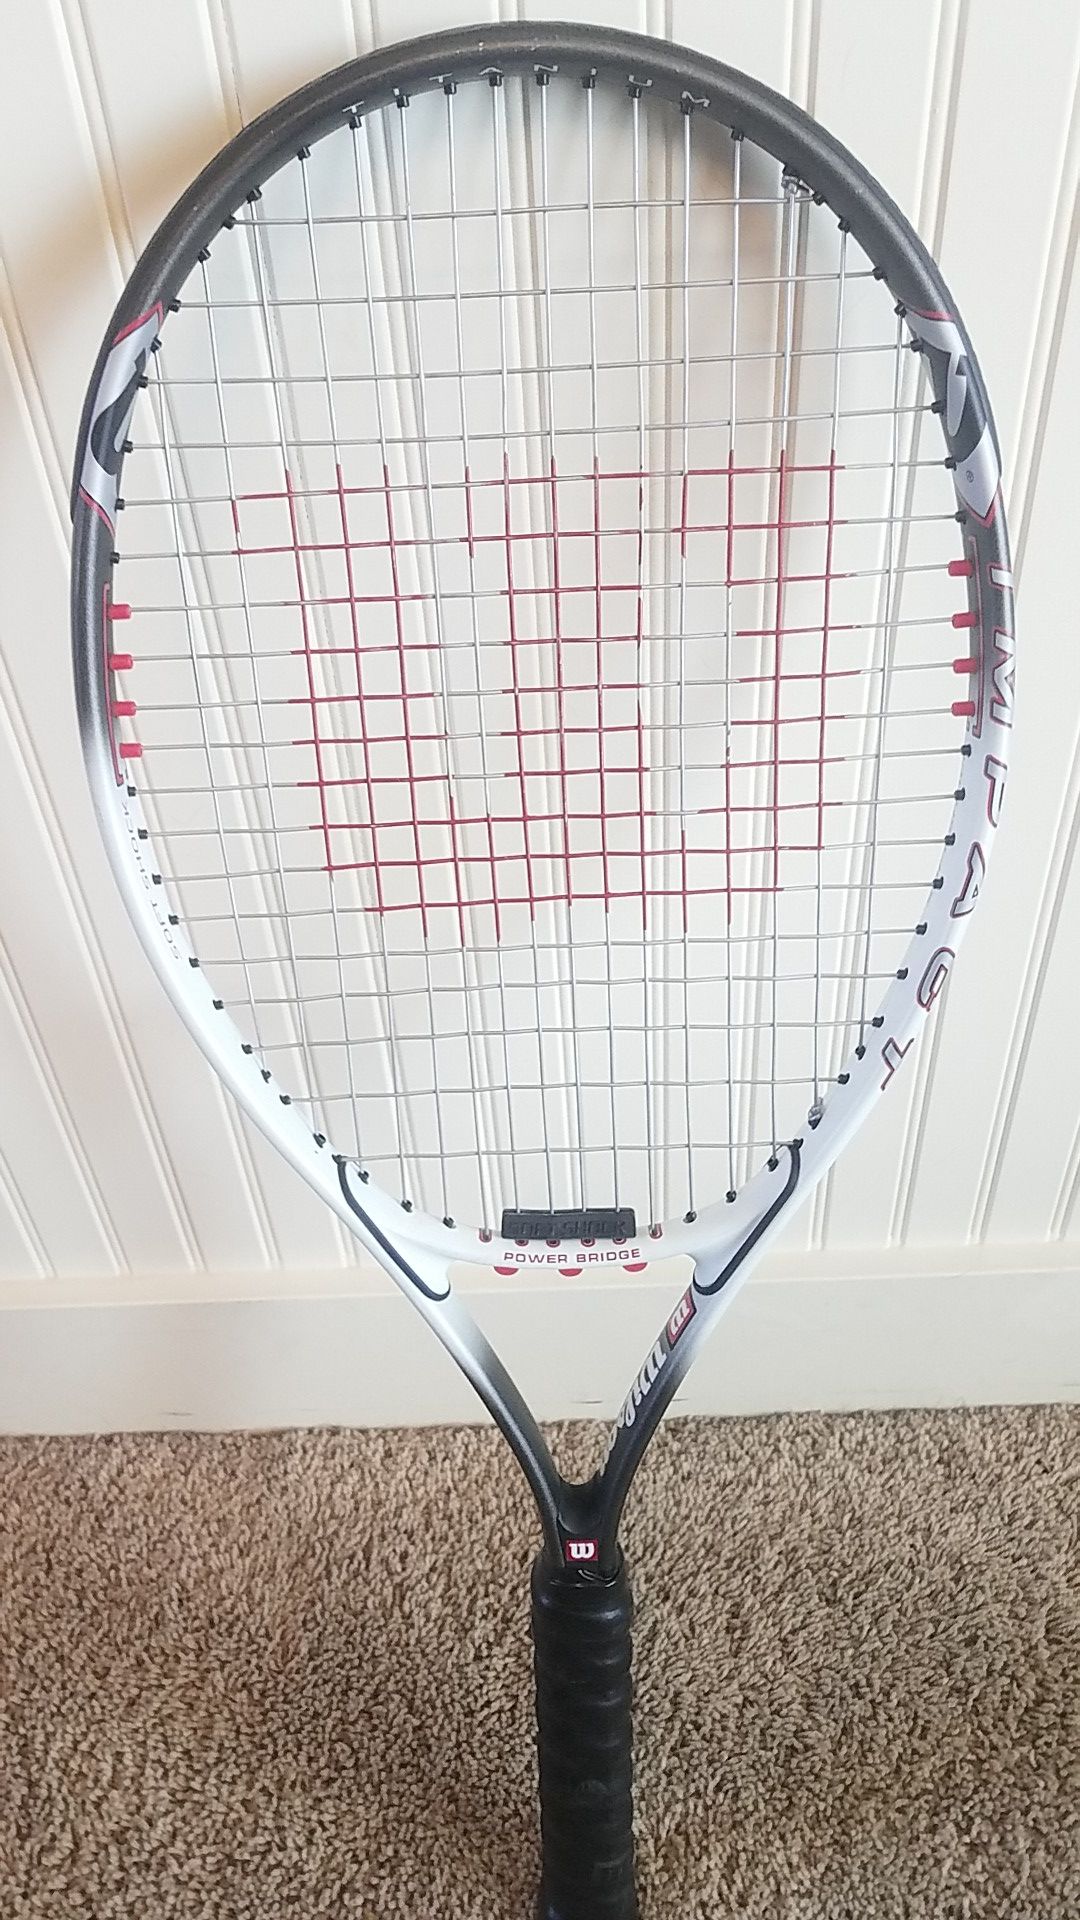 Tennis racket- Wilson titanium